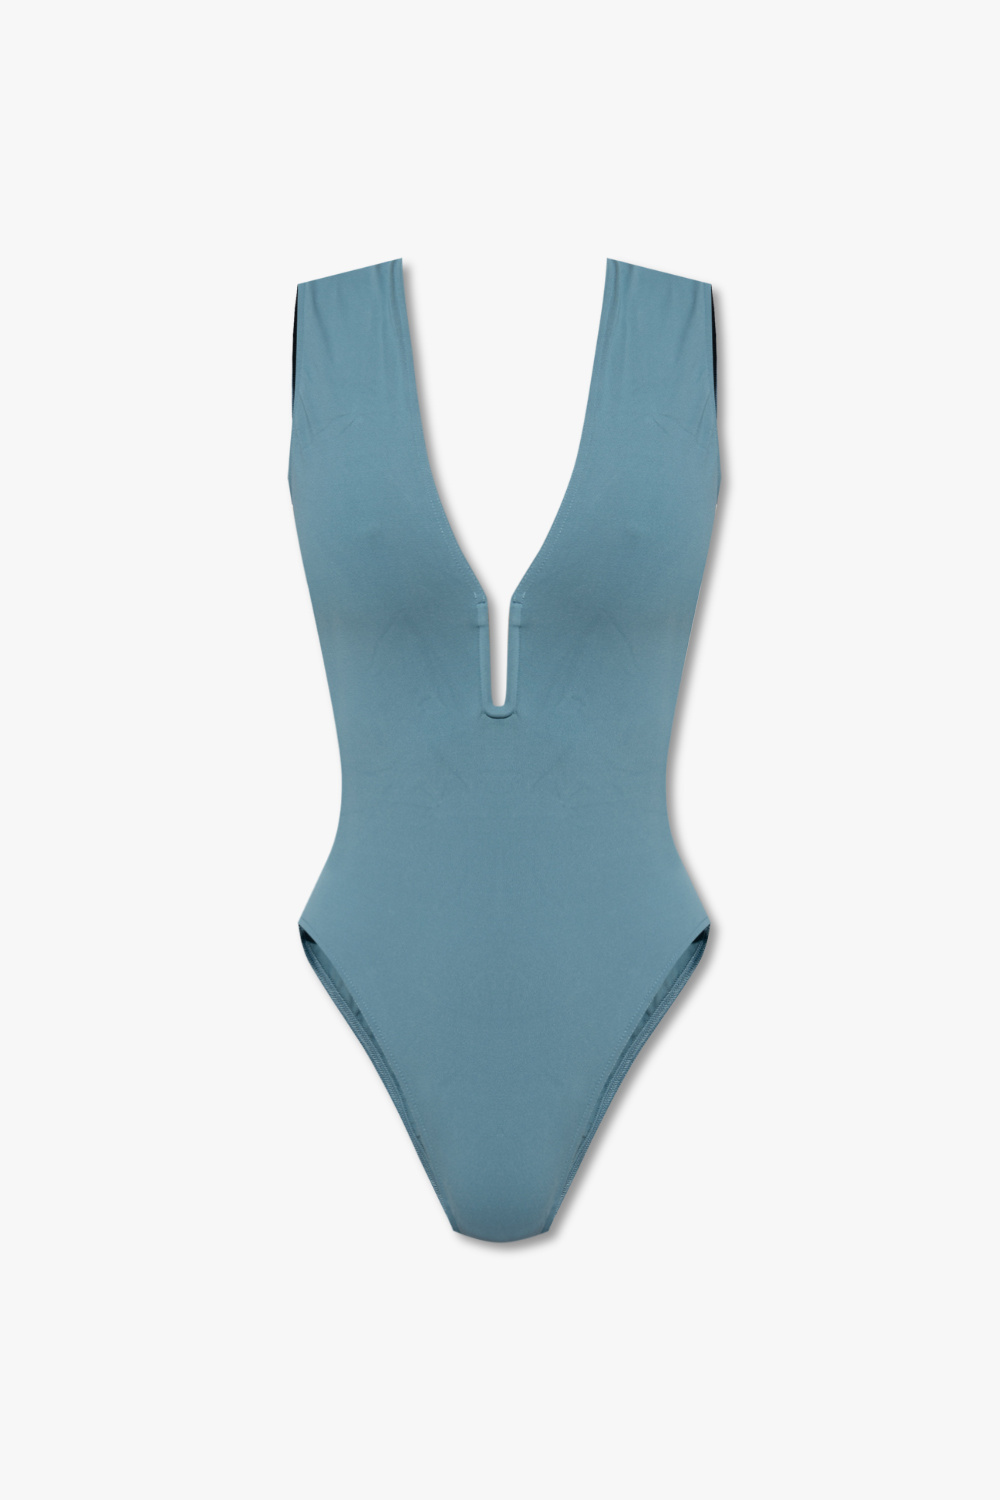 Eres ‘Une’ one-piece swimsuit